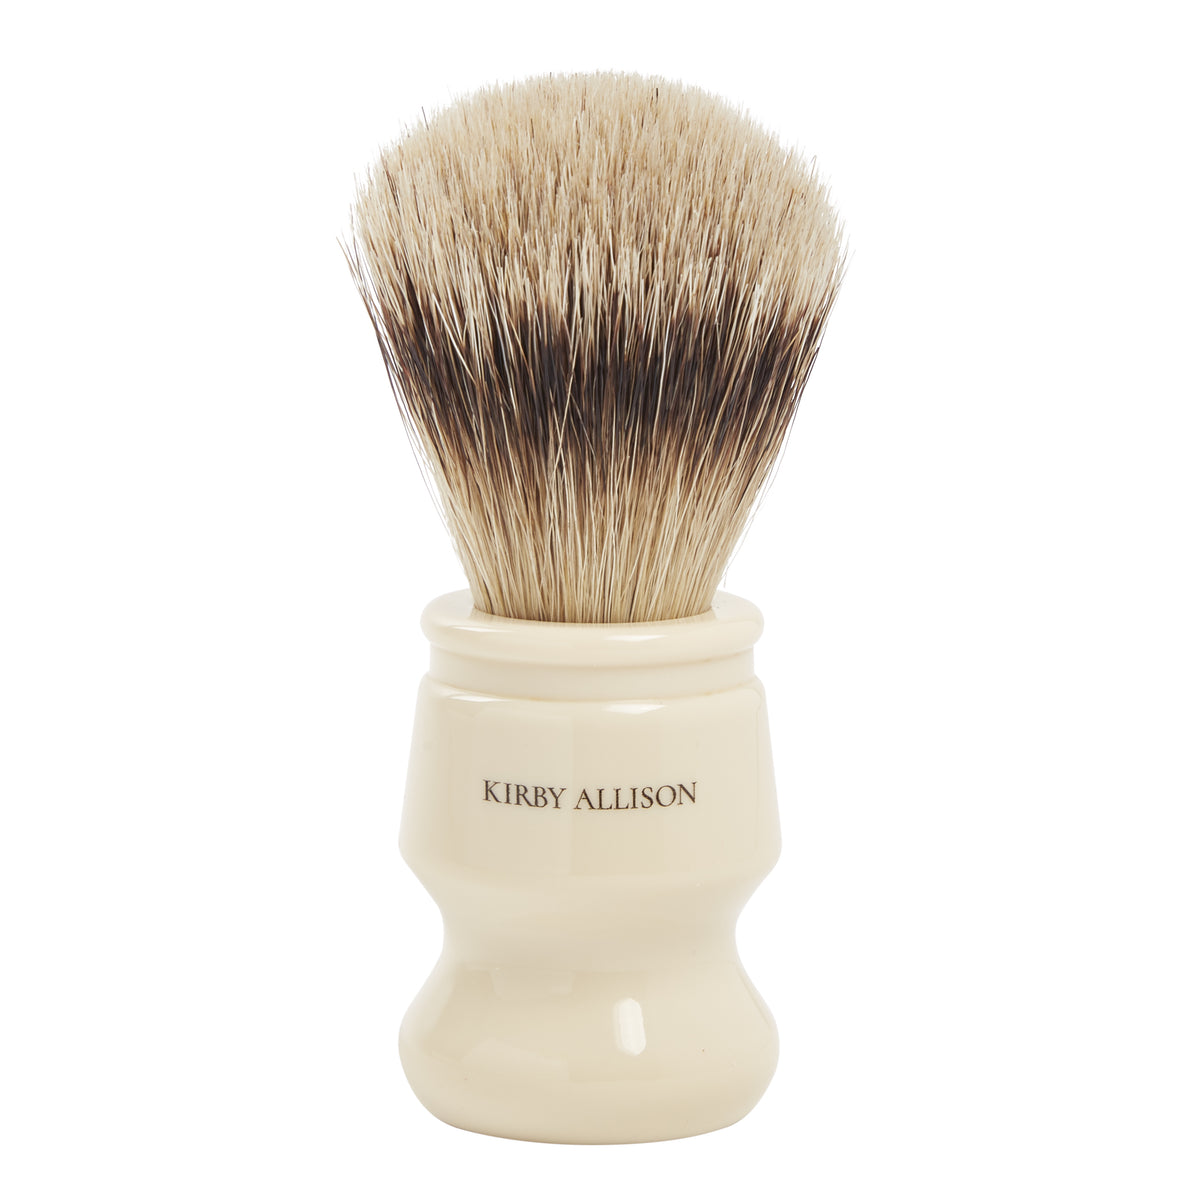 An Kirby Allison Best Badger Brush on a white background perfect for wet shaving.